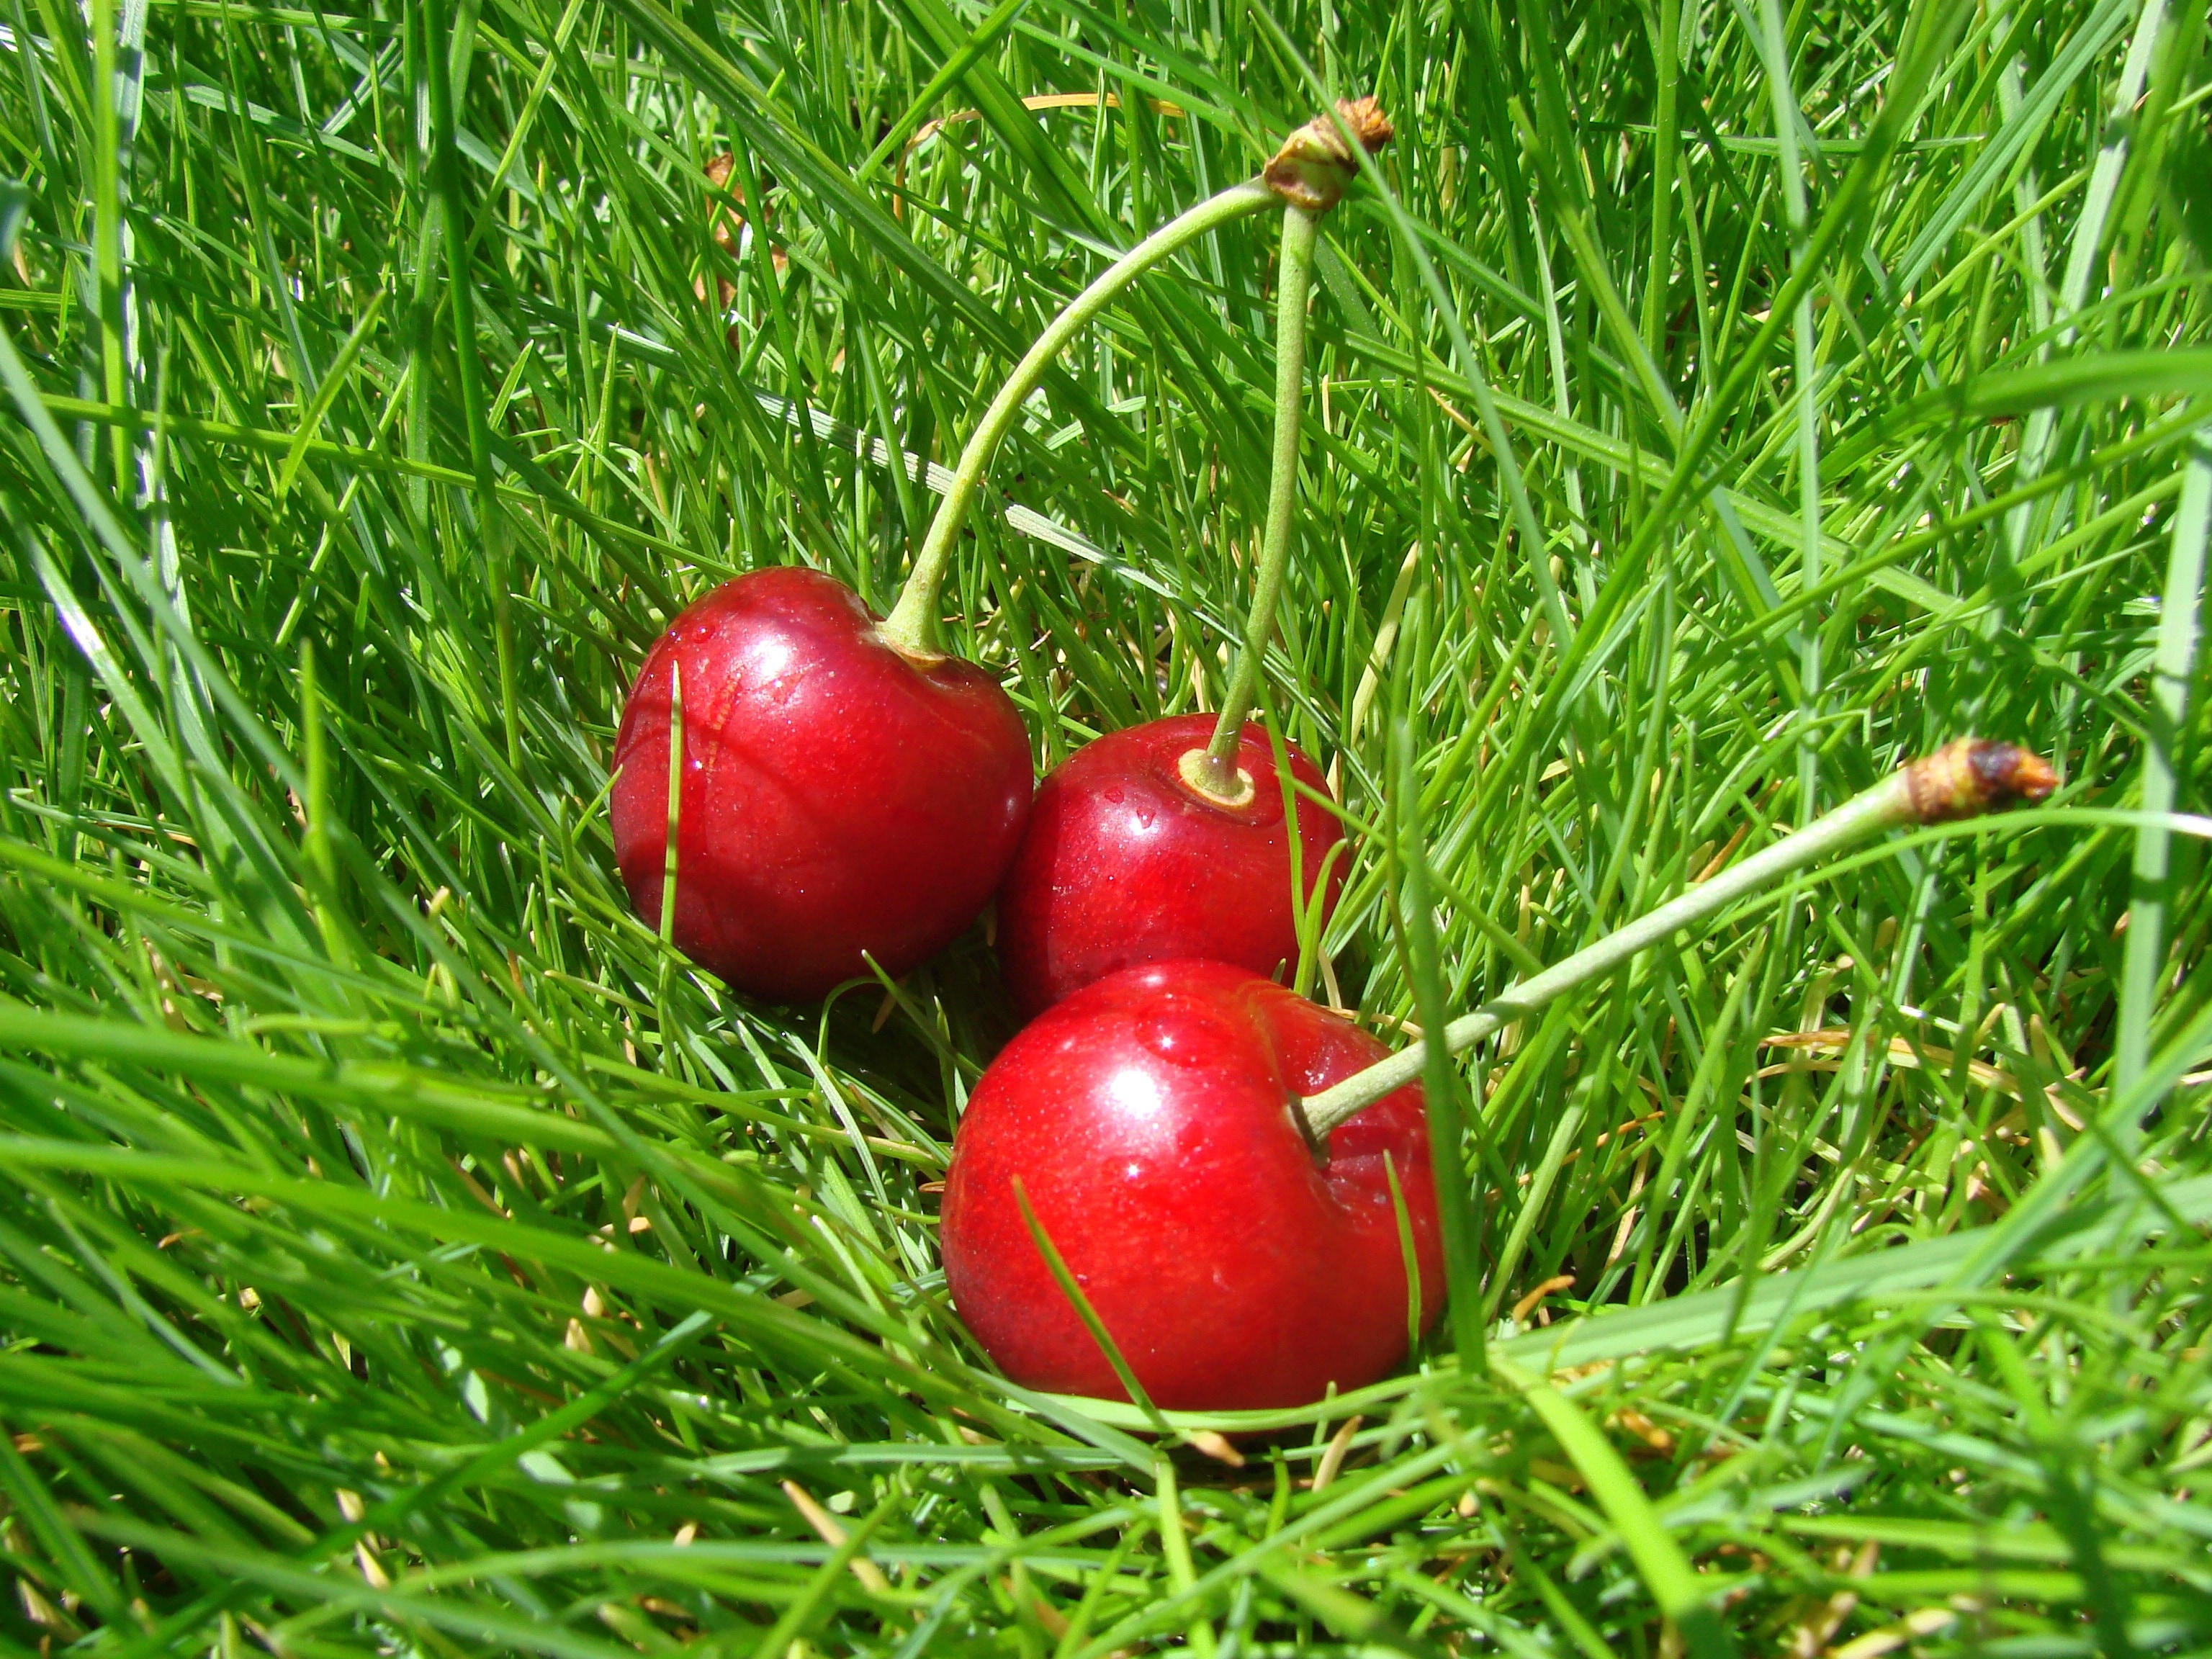 In Grass, Cherry, red, grass